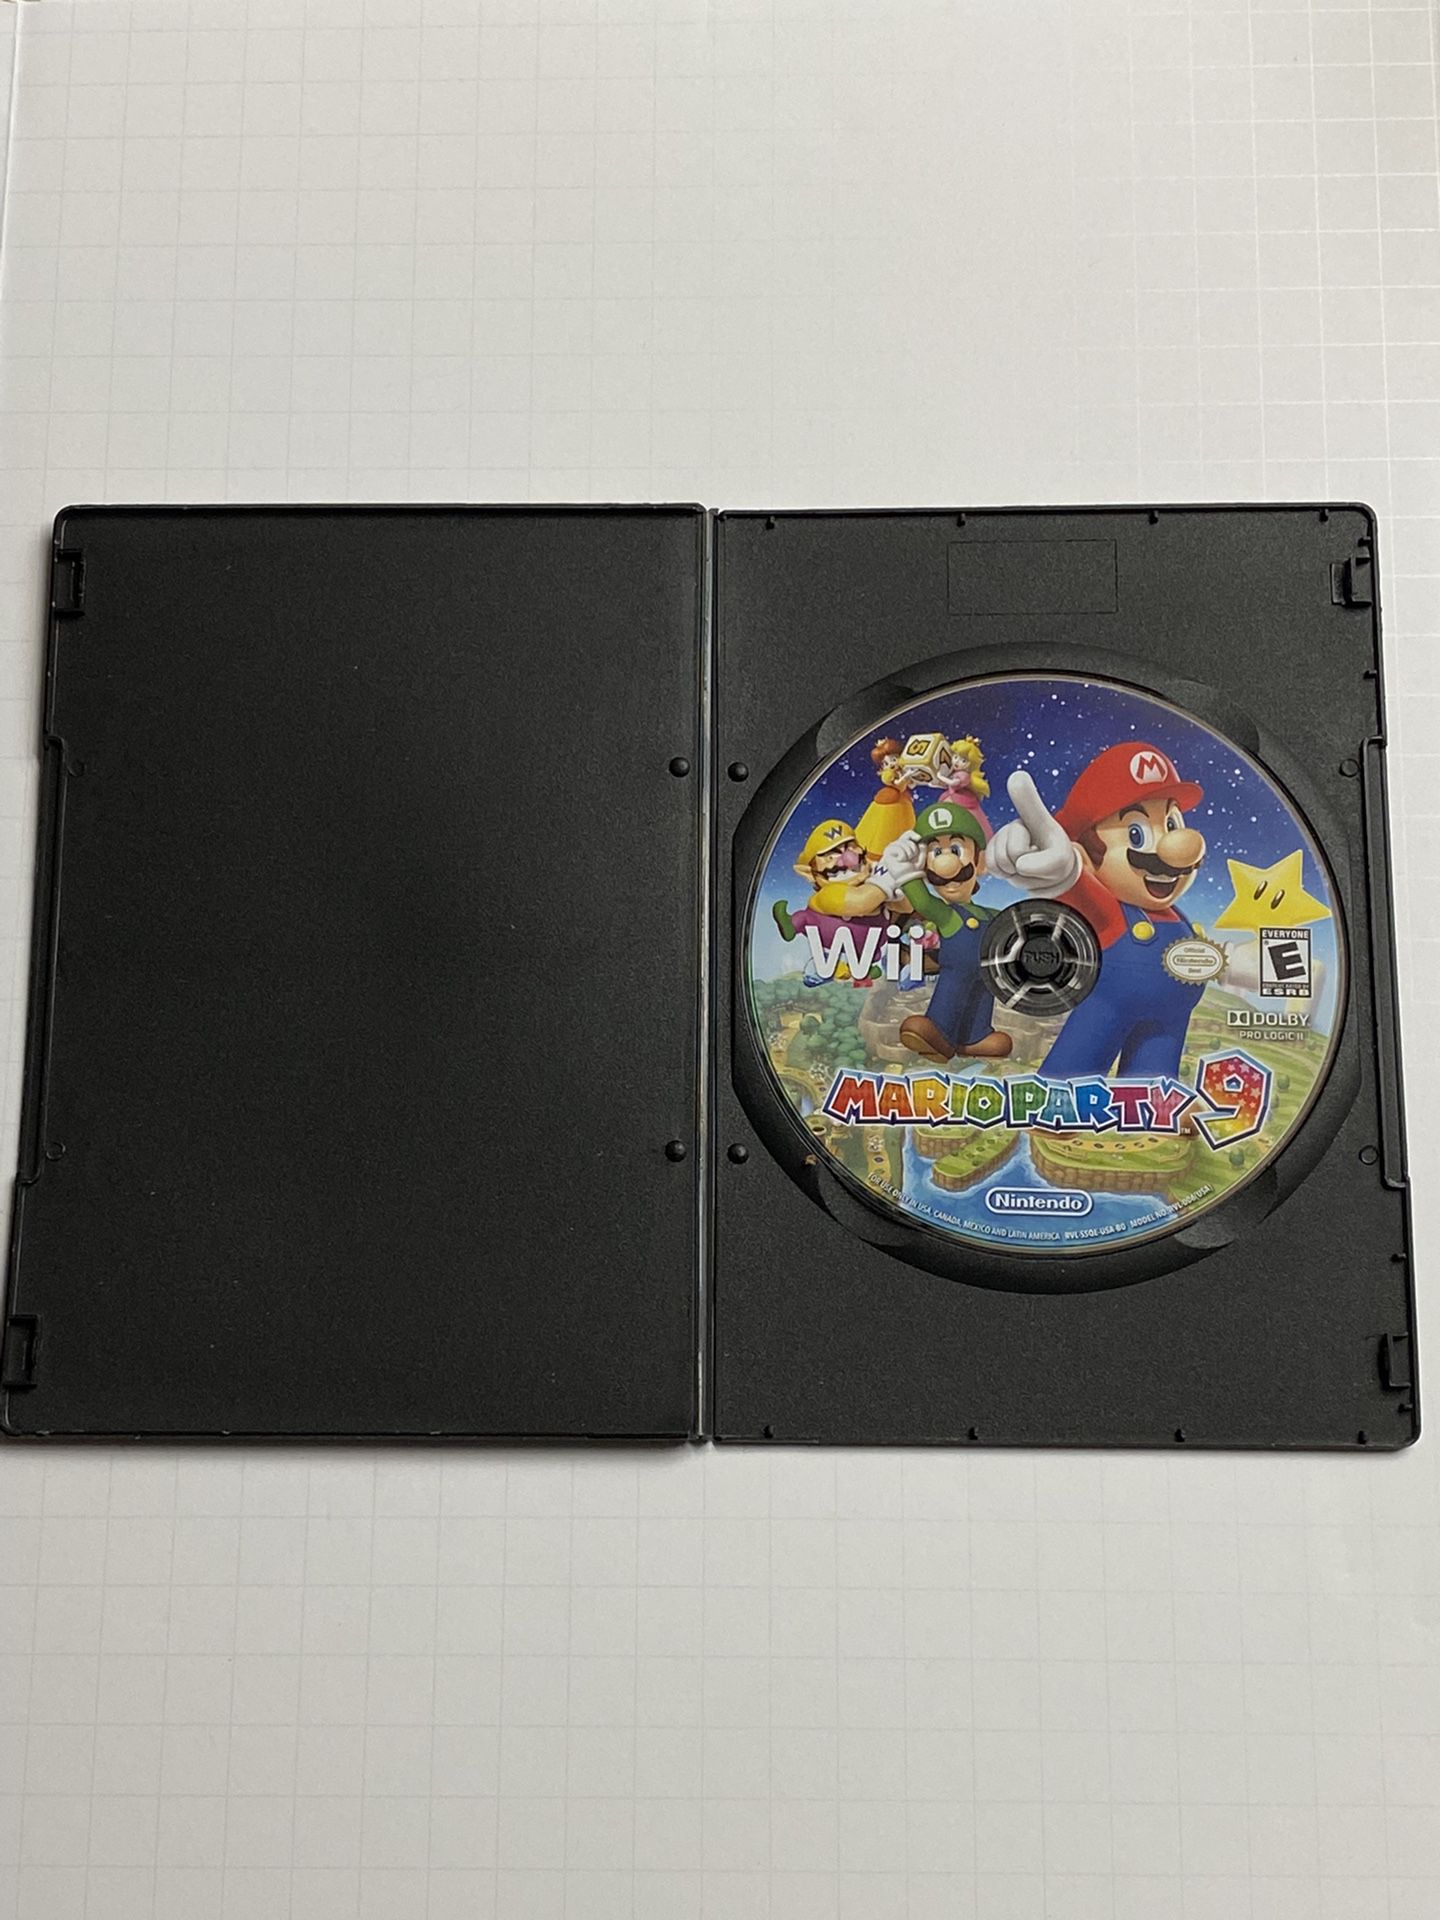 Mario Party 9 For Nintendo Wii 